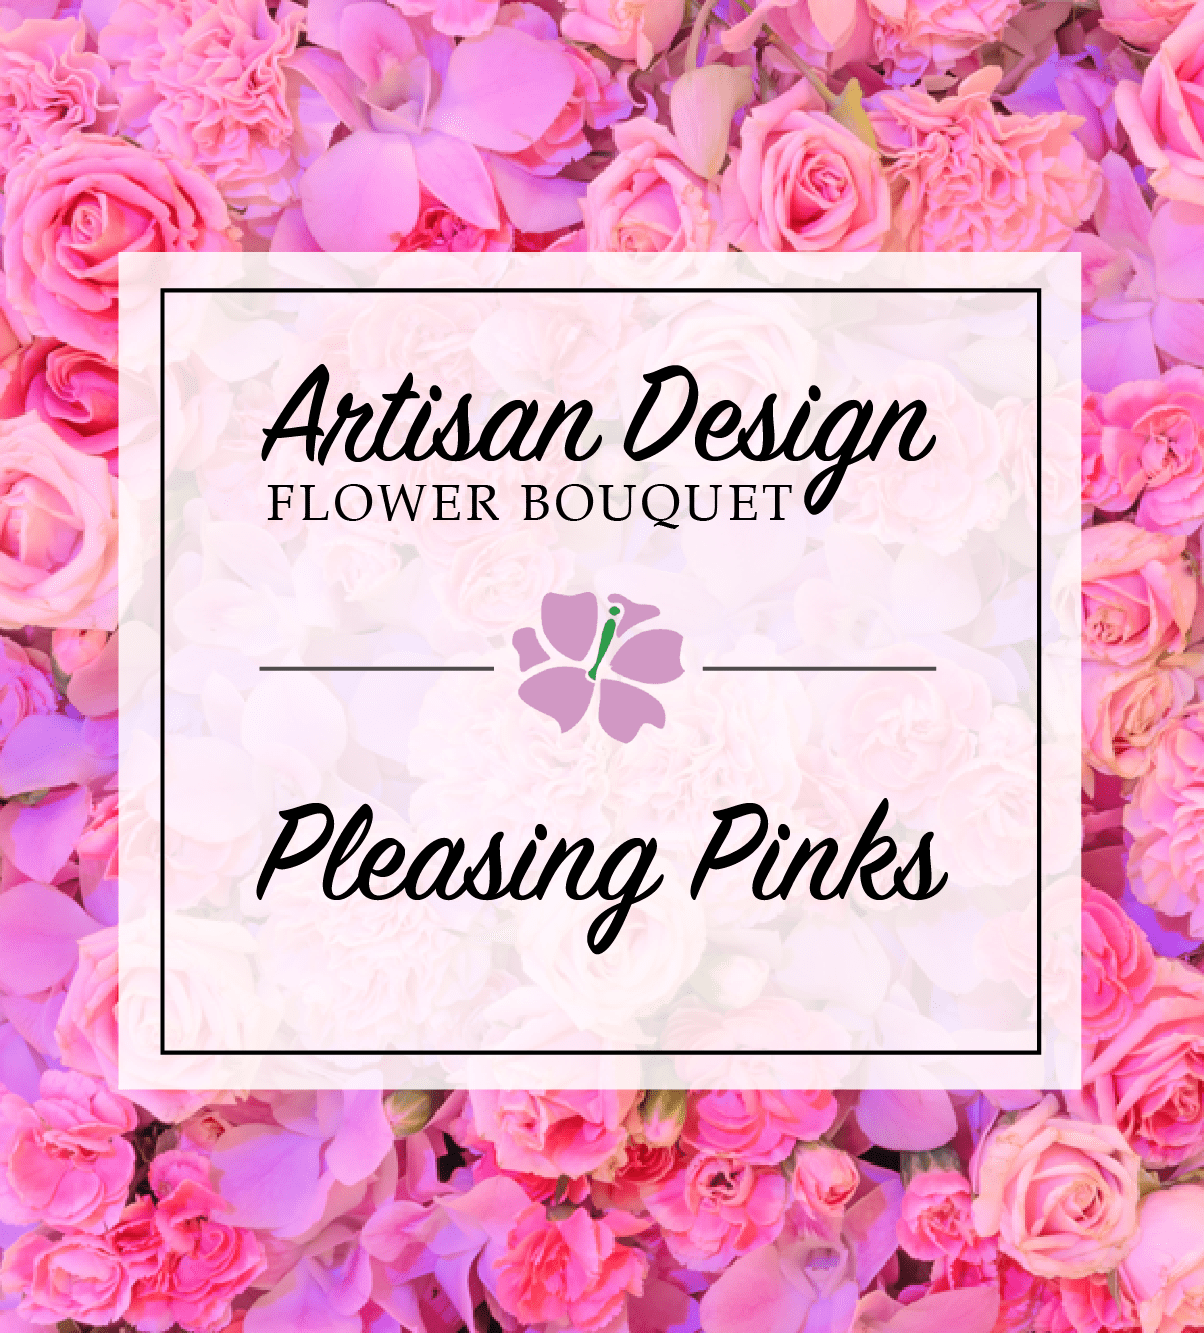 Artist's Design: Pleasing Pinks